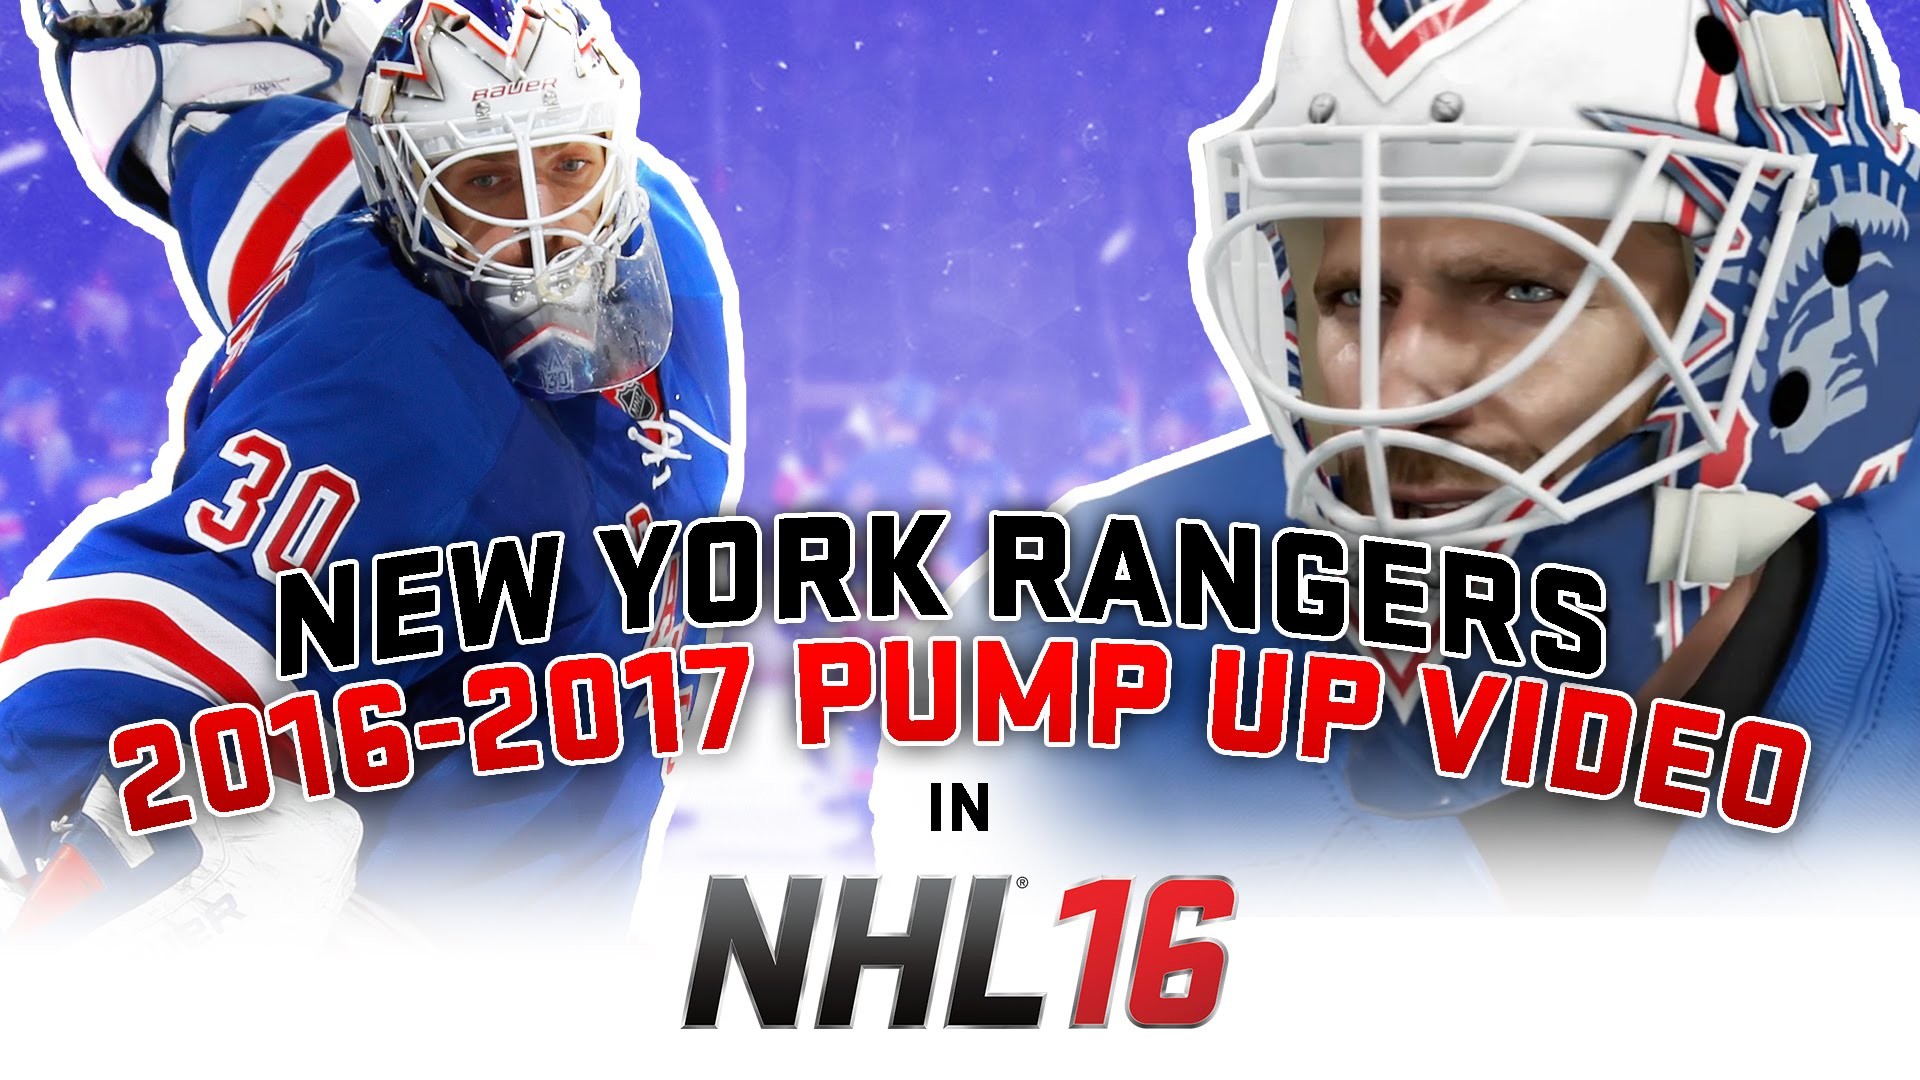 1920x1080 New York Rangers 2016-2017 Pump Up Video X NHL 16